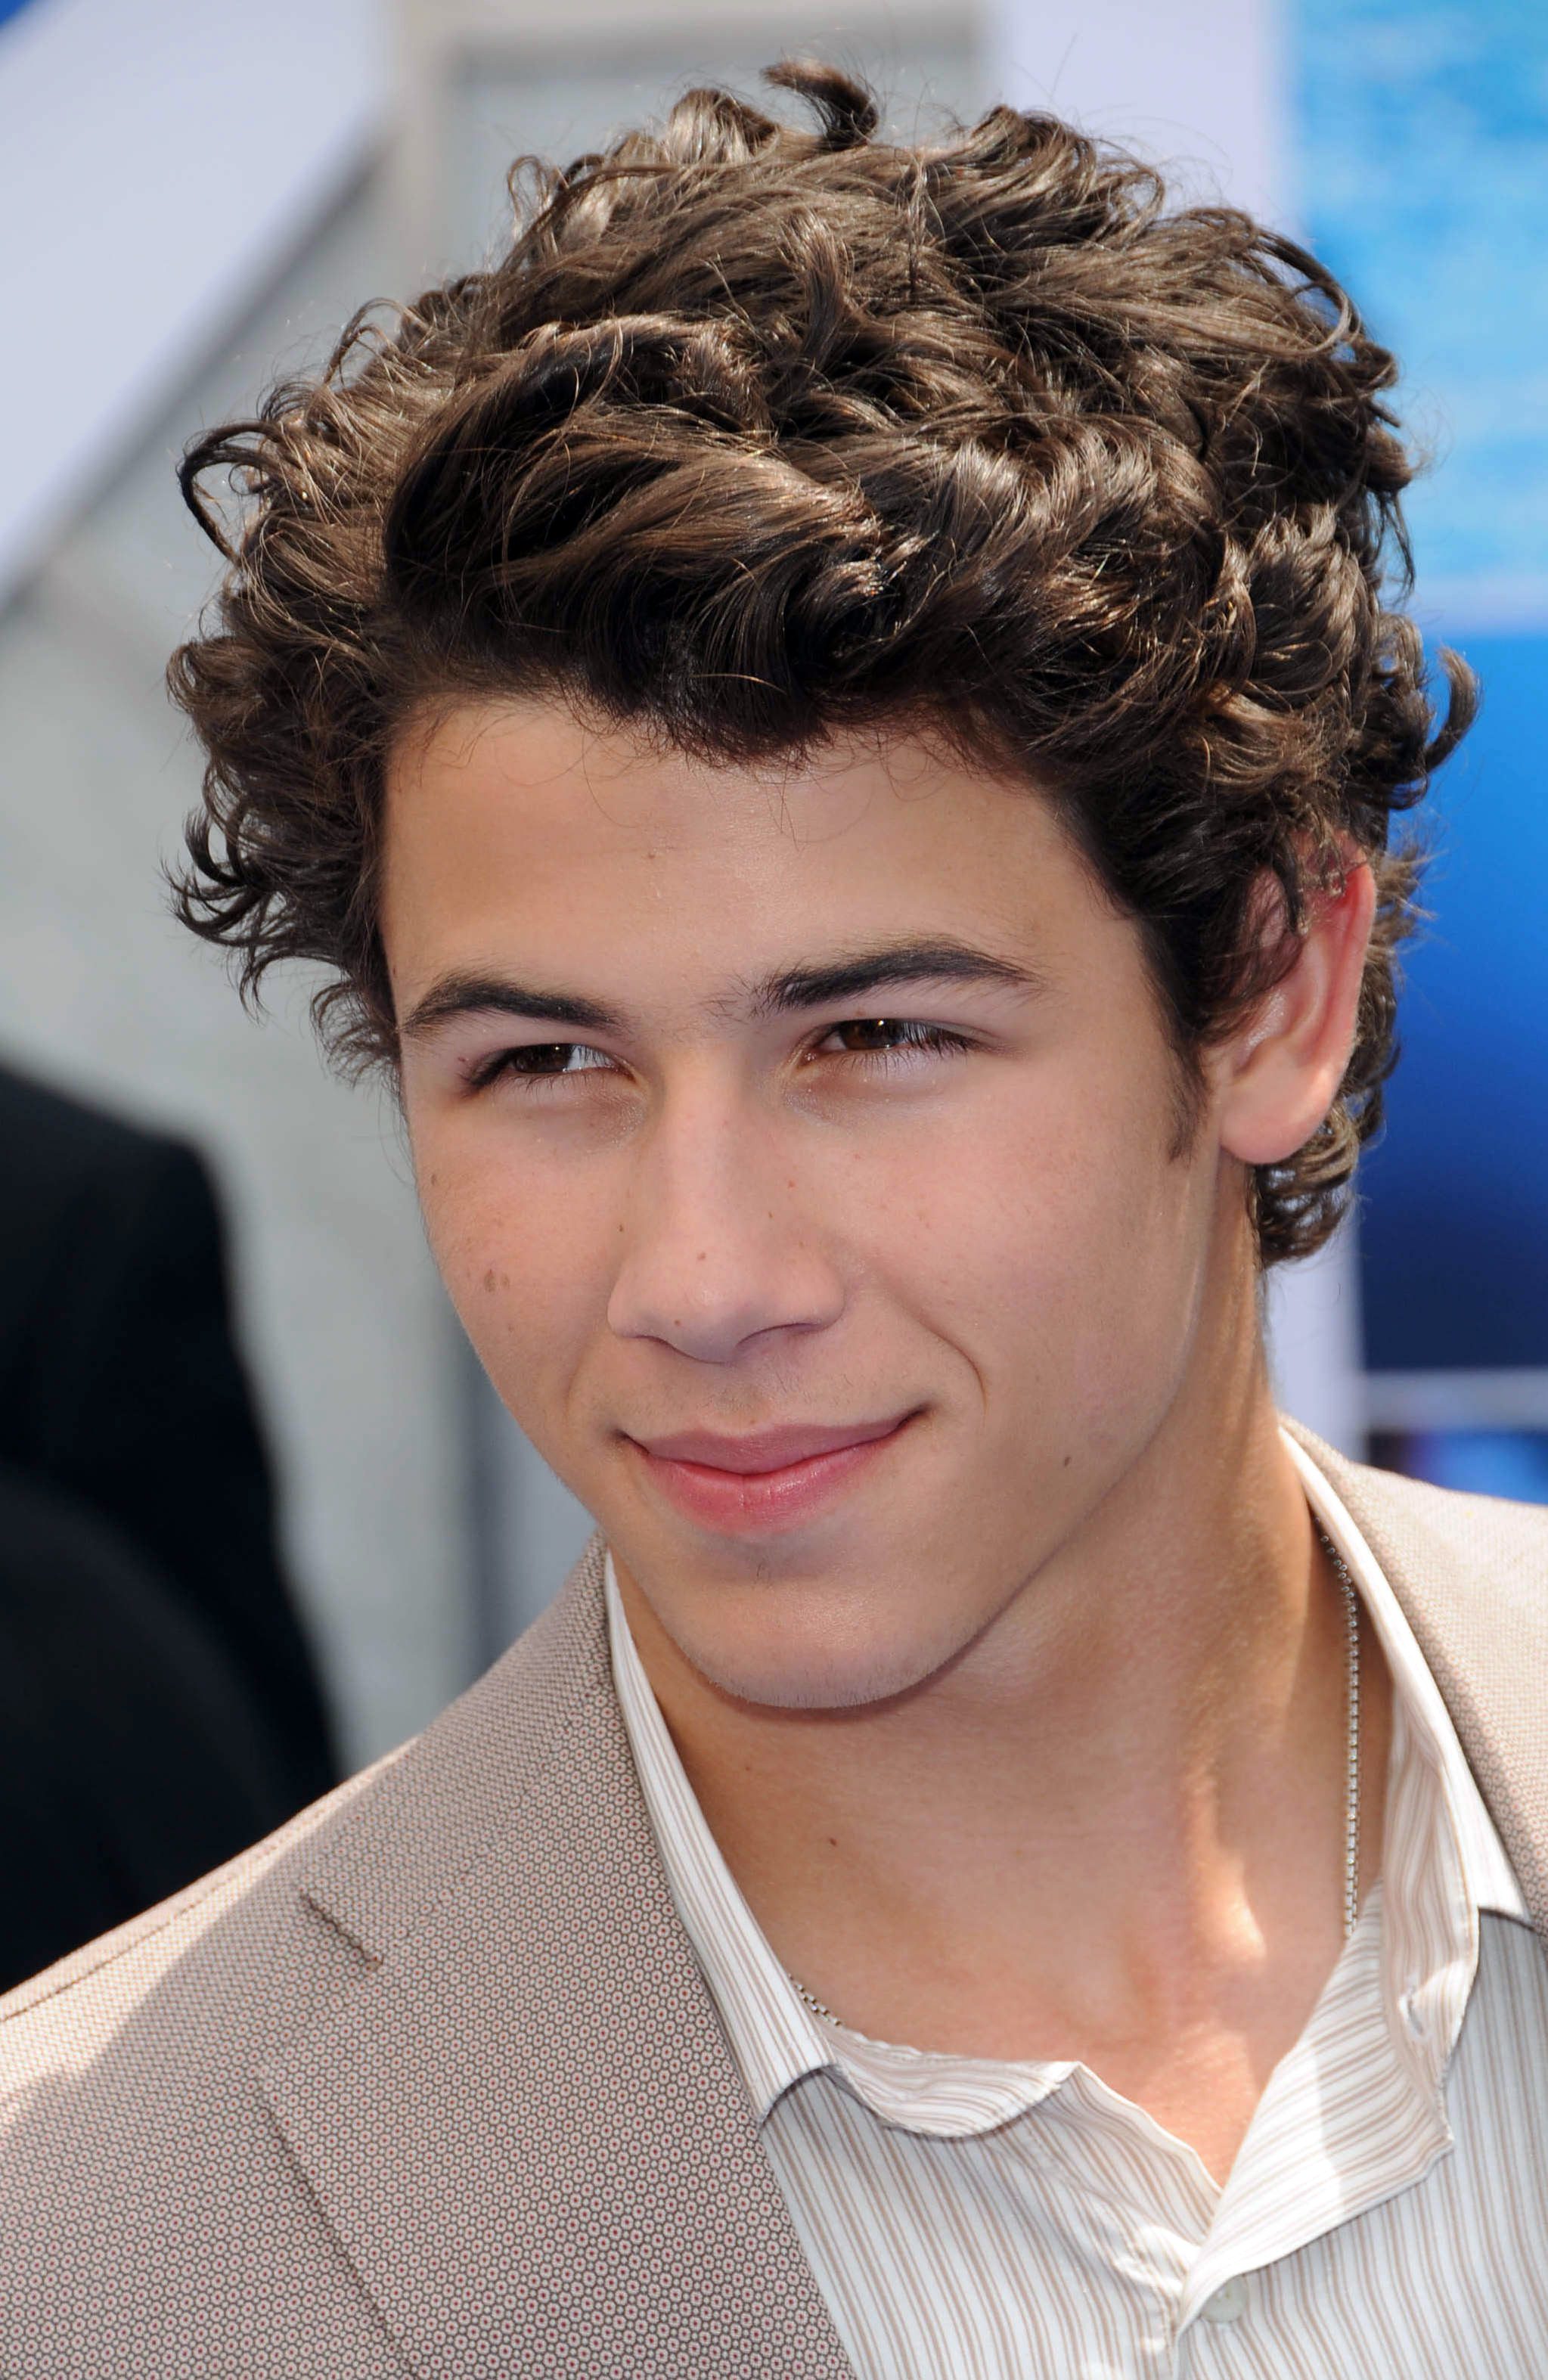 Nick Jonas’s Tousled Curls